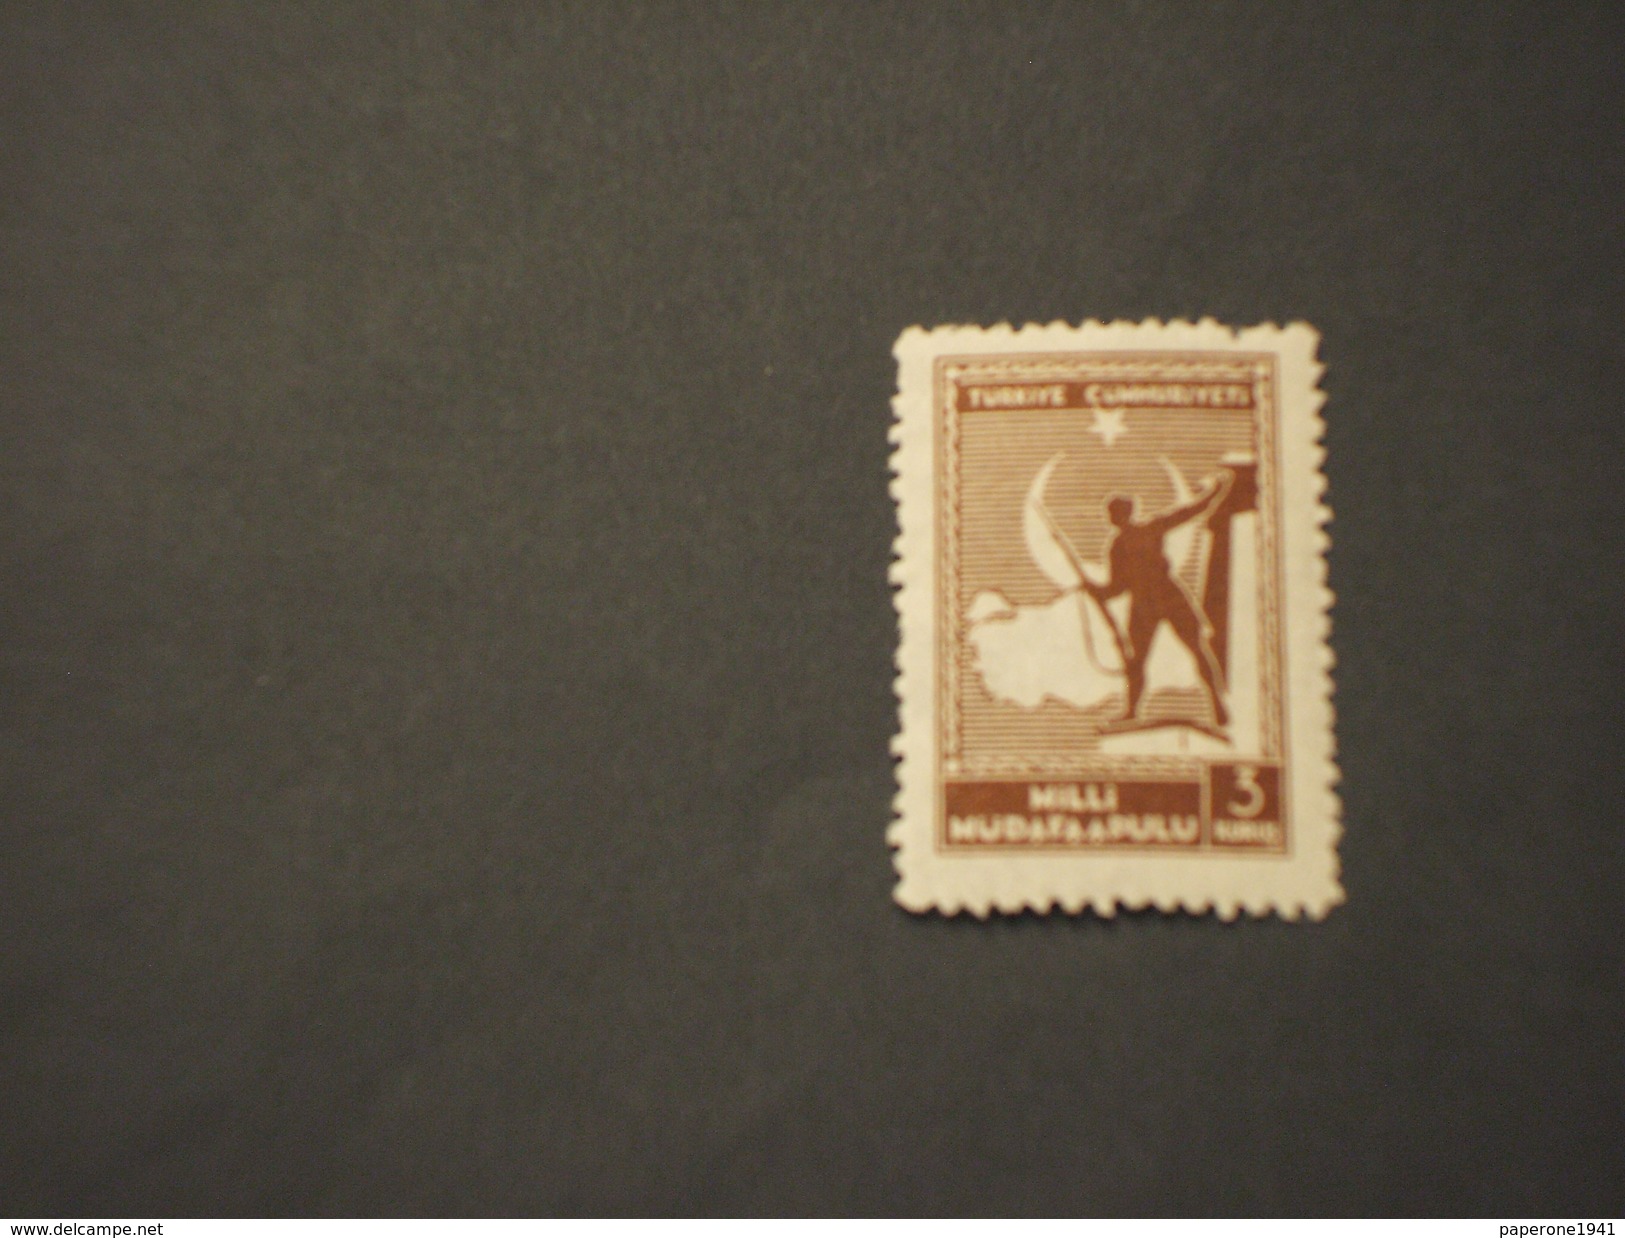 TURCHIA - BENEFICENZA - 1941/4 PRODIFESA  3 K. - NUOVO(++) - Unused Stamps